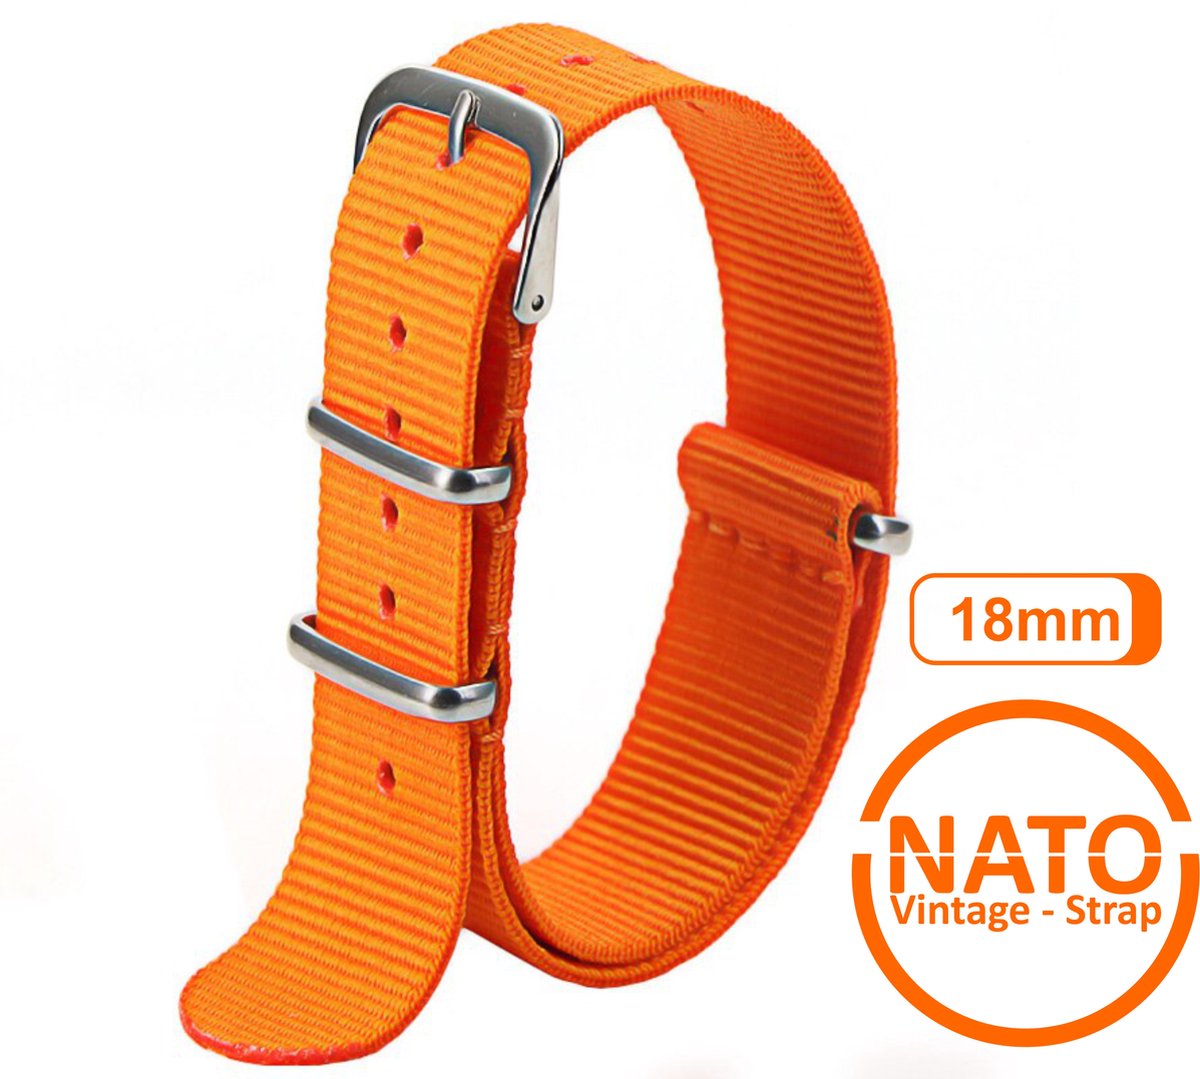 18mm Premium Nato Strap Oranje - Vintage James Bond - Nato Strap collectie - Mannen - Horlogeband - 18 mm bandbreedte voor oa. Seiko Rolex Omega Casio en Citizen